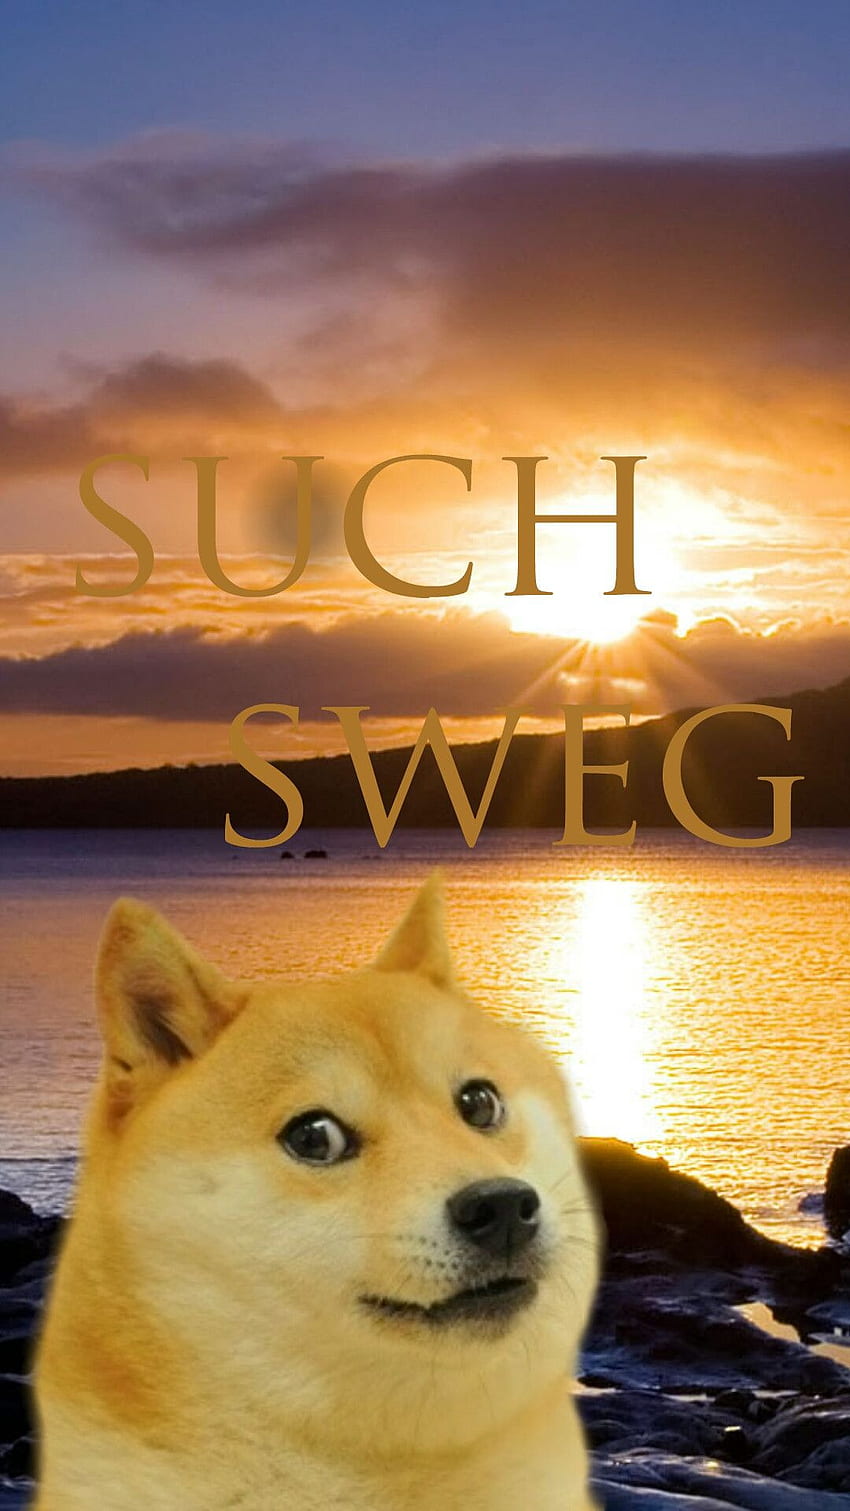 Meme I created for my frienda, Doge HD phone wallpaper | Pxfuel